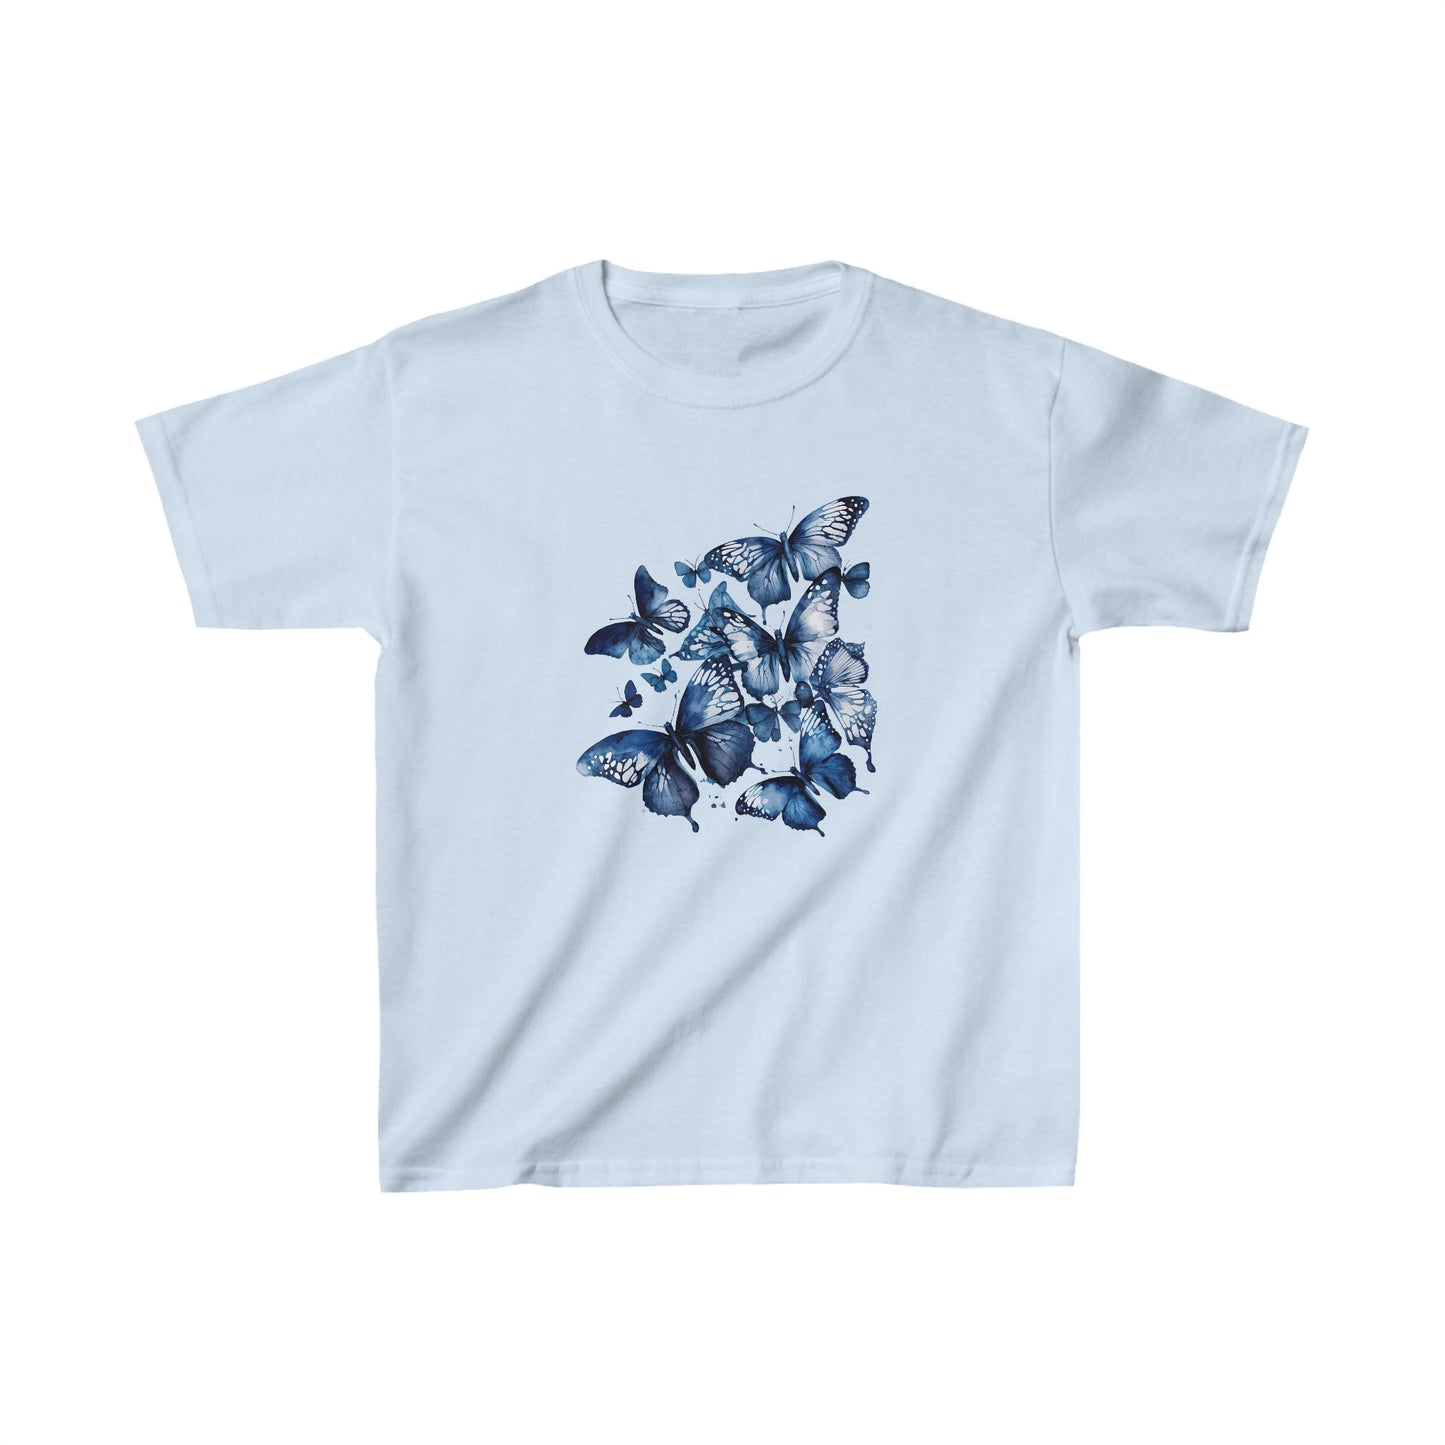 Women's Baby Tee Retro Butterfly Shirt.